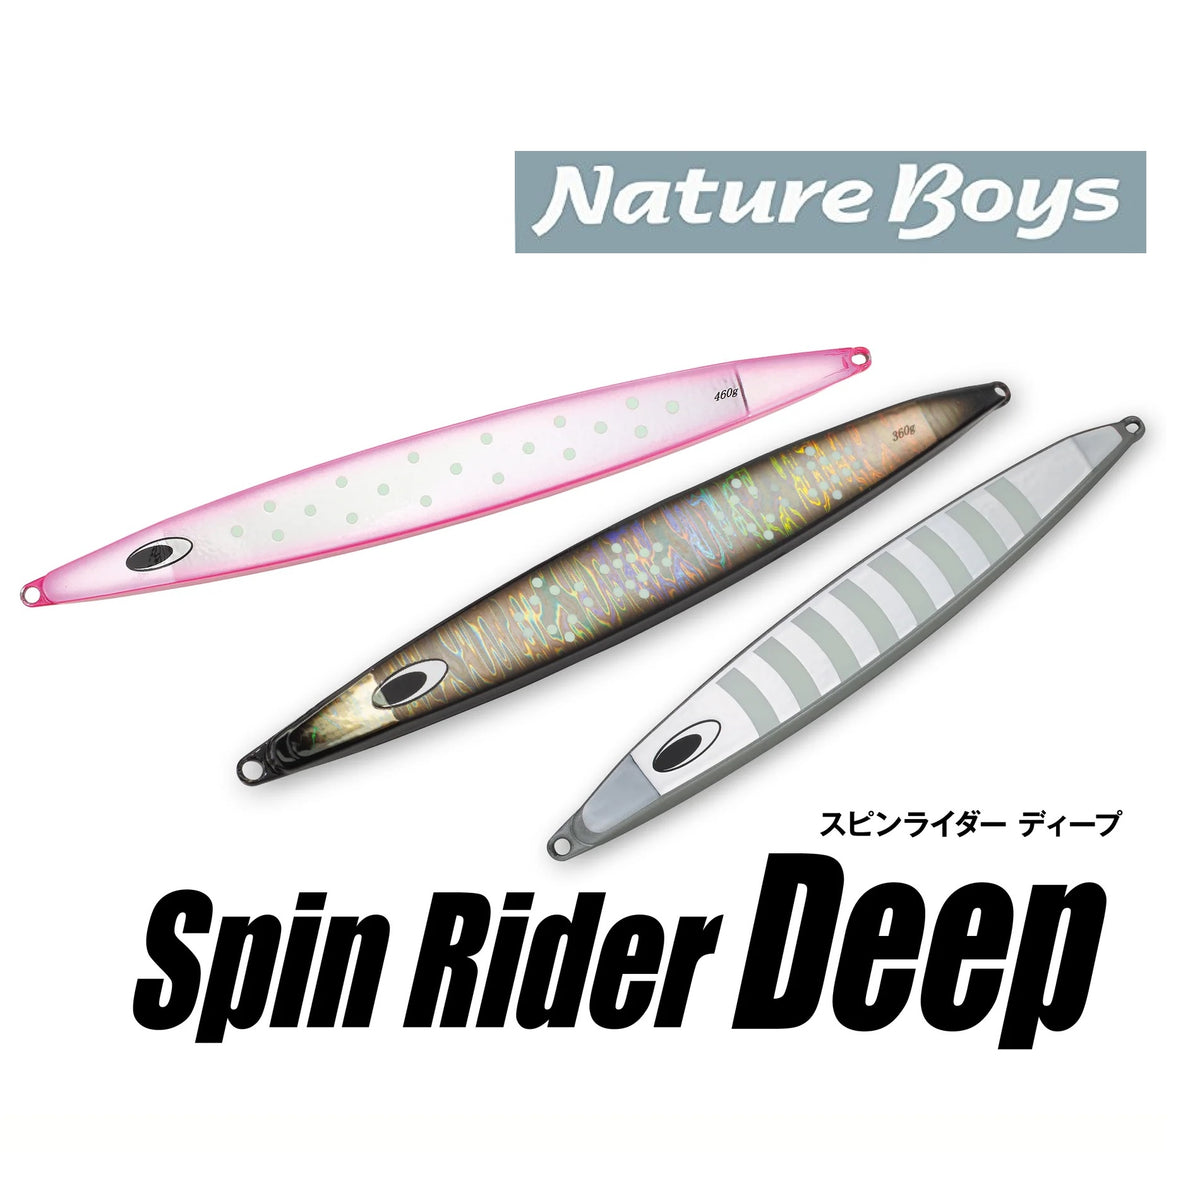 Nature Boys Metal jig Spin Rider Deep 220g